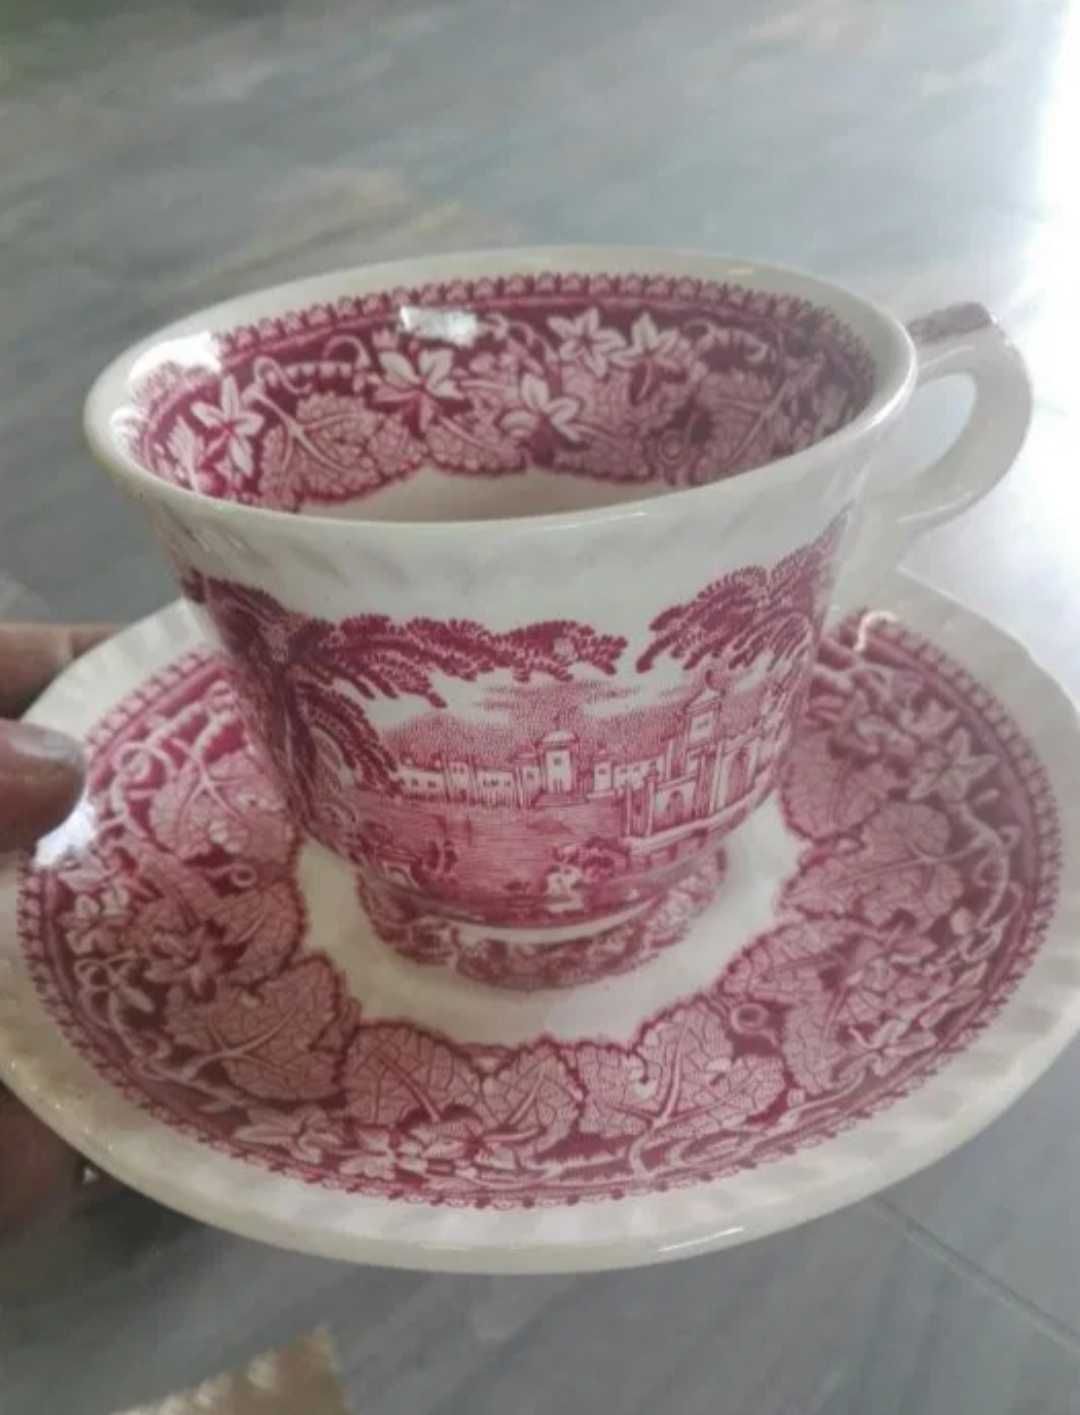 Ceramika porcelana Masons Vista , pink vist FRANCISCAN nie bolesławiec